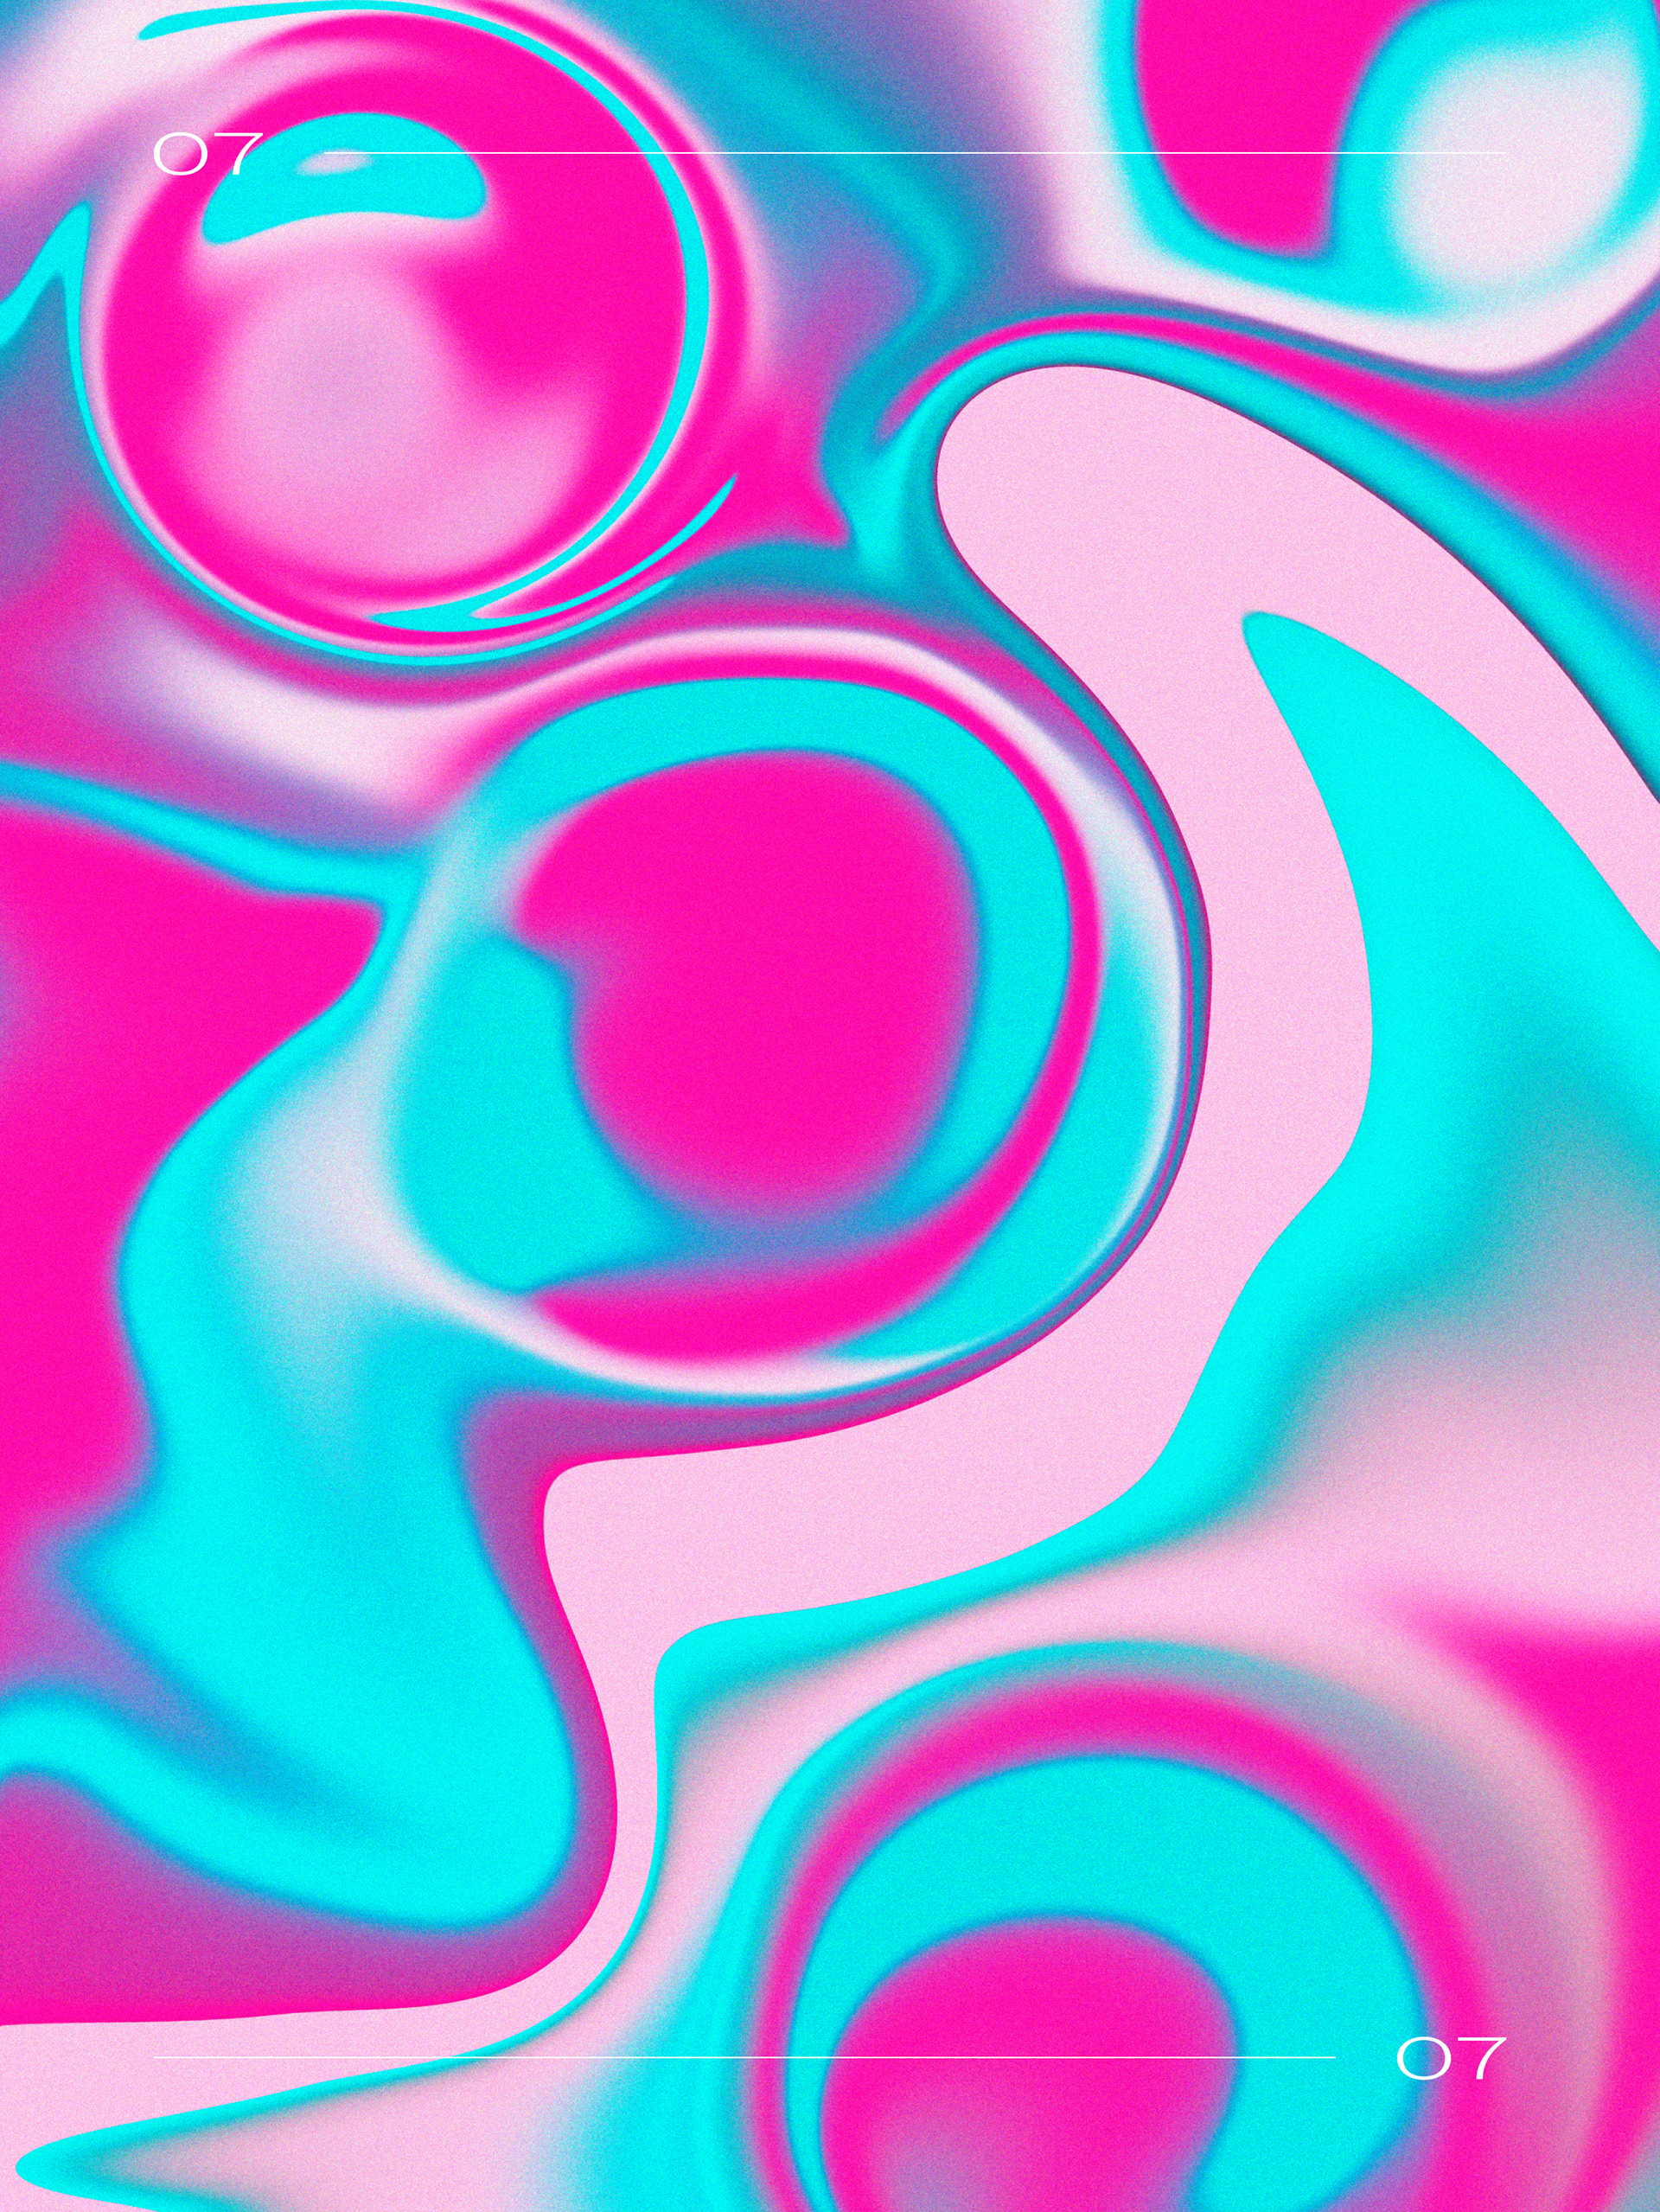 Artistic Liquefy Swirl Digital Art Wallpapers